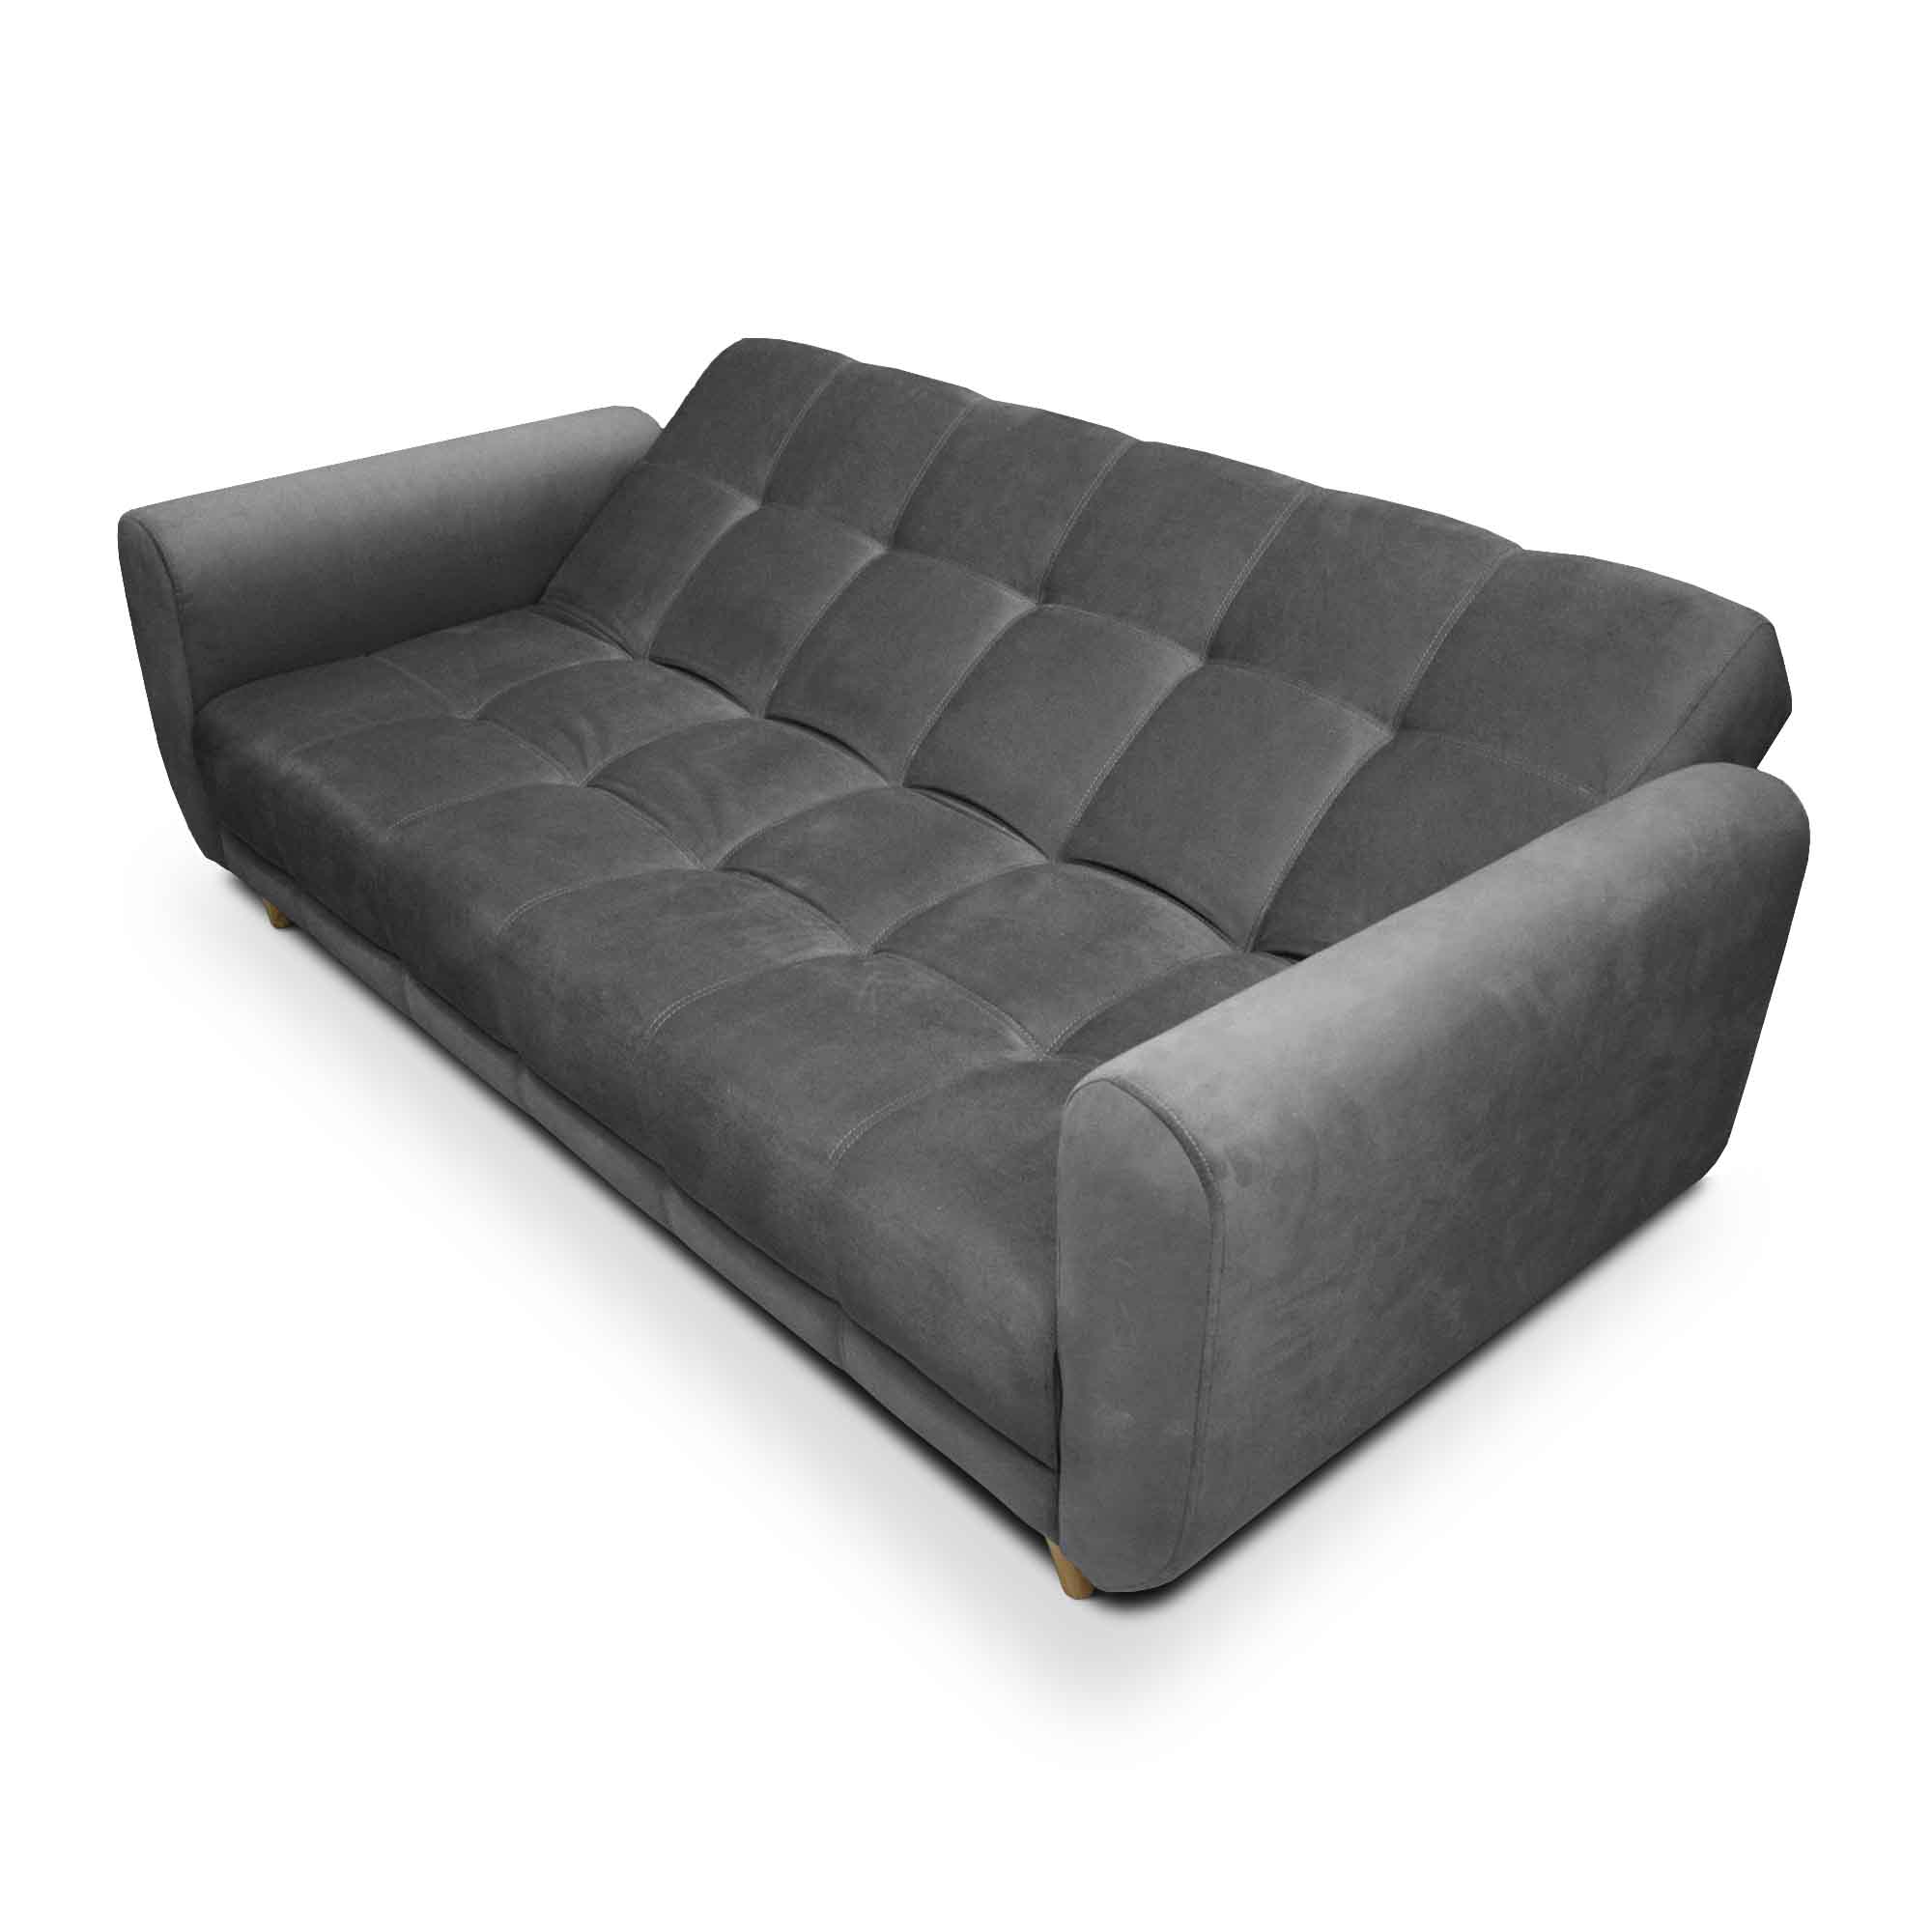 Sofa Cama Comfort Sistema Clic Clac Color Gris